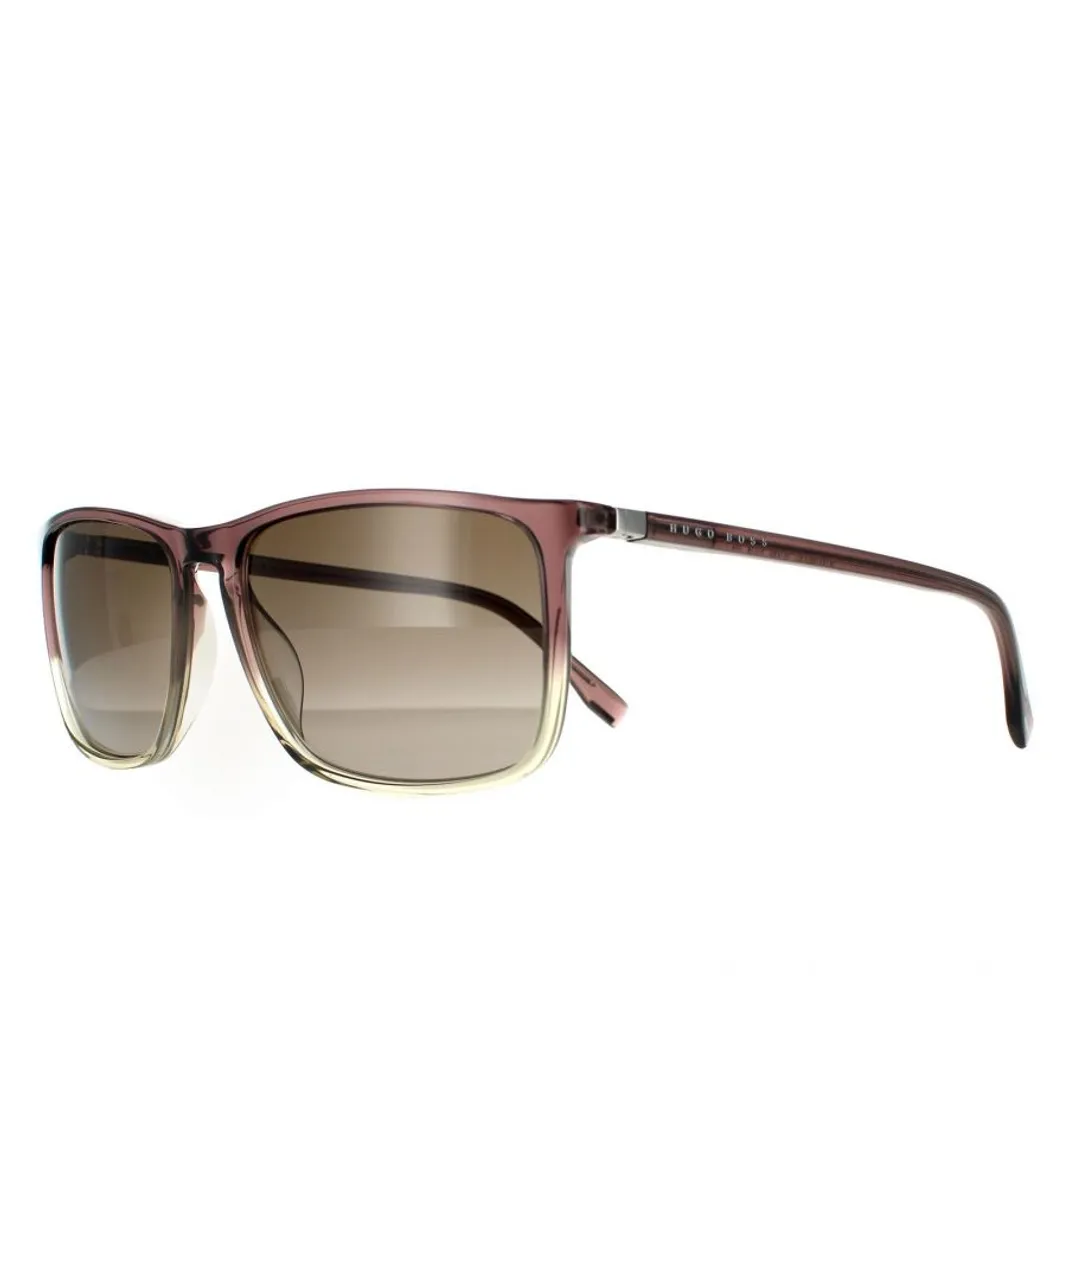 Hugo Boss Square Mens Brown Grey Gradient Sunglasses - One